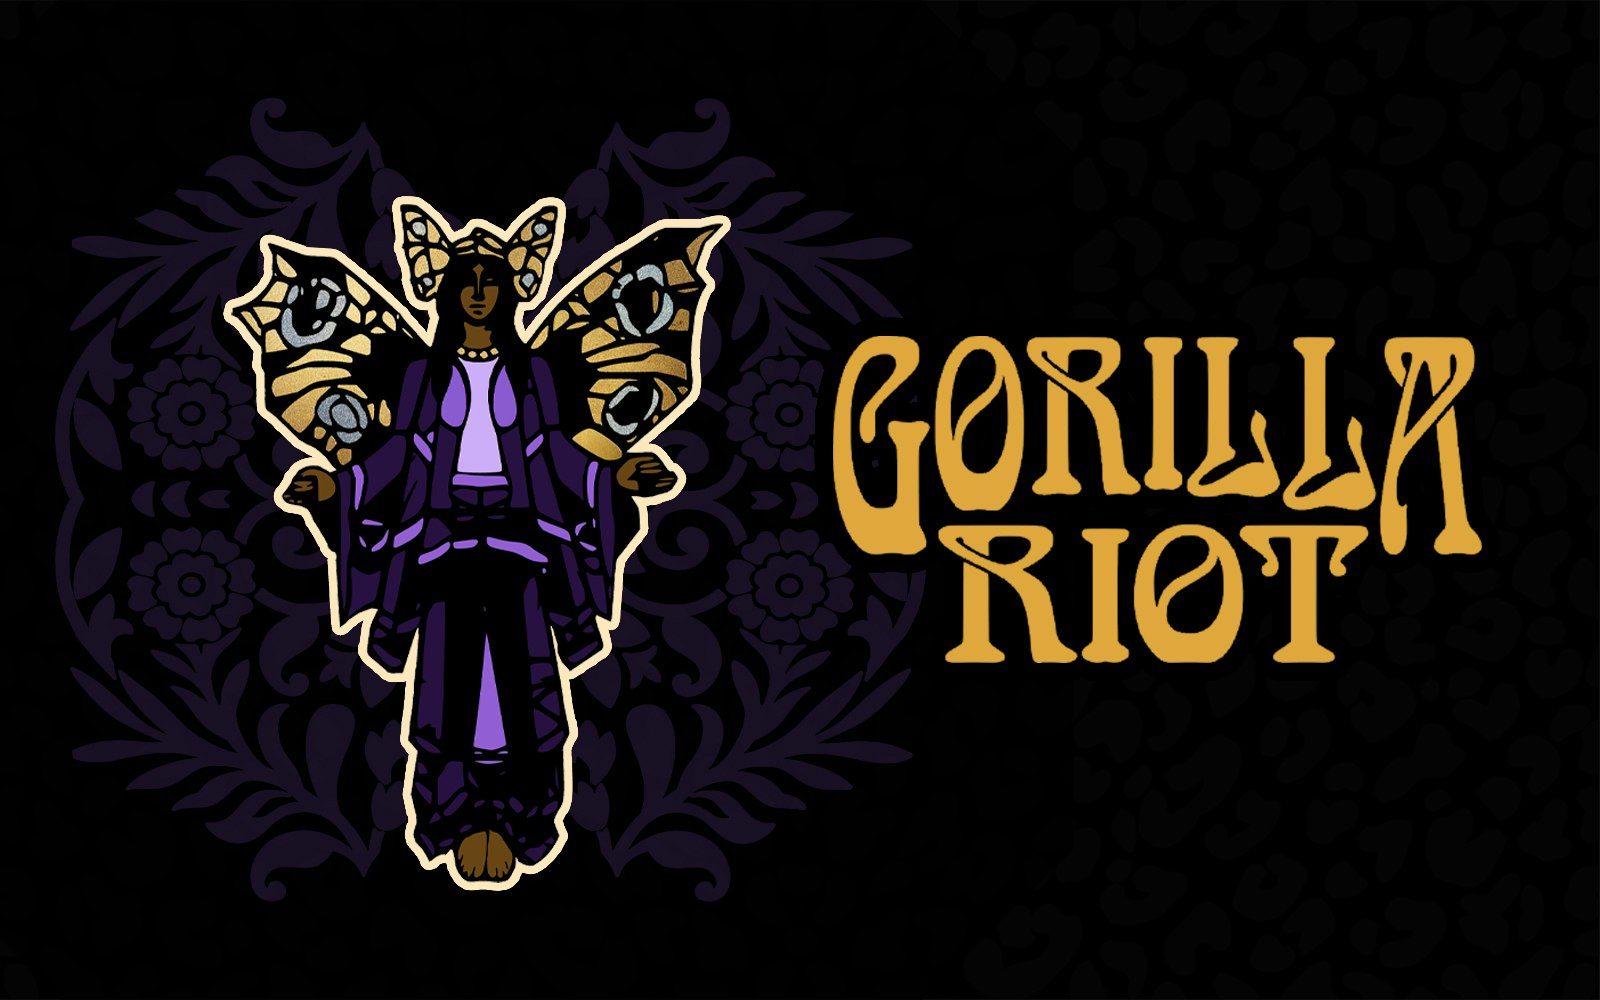 Gorilla Riot w/ special guests